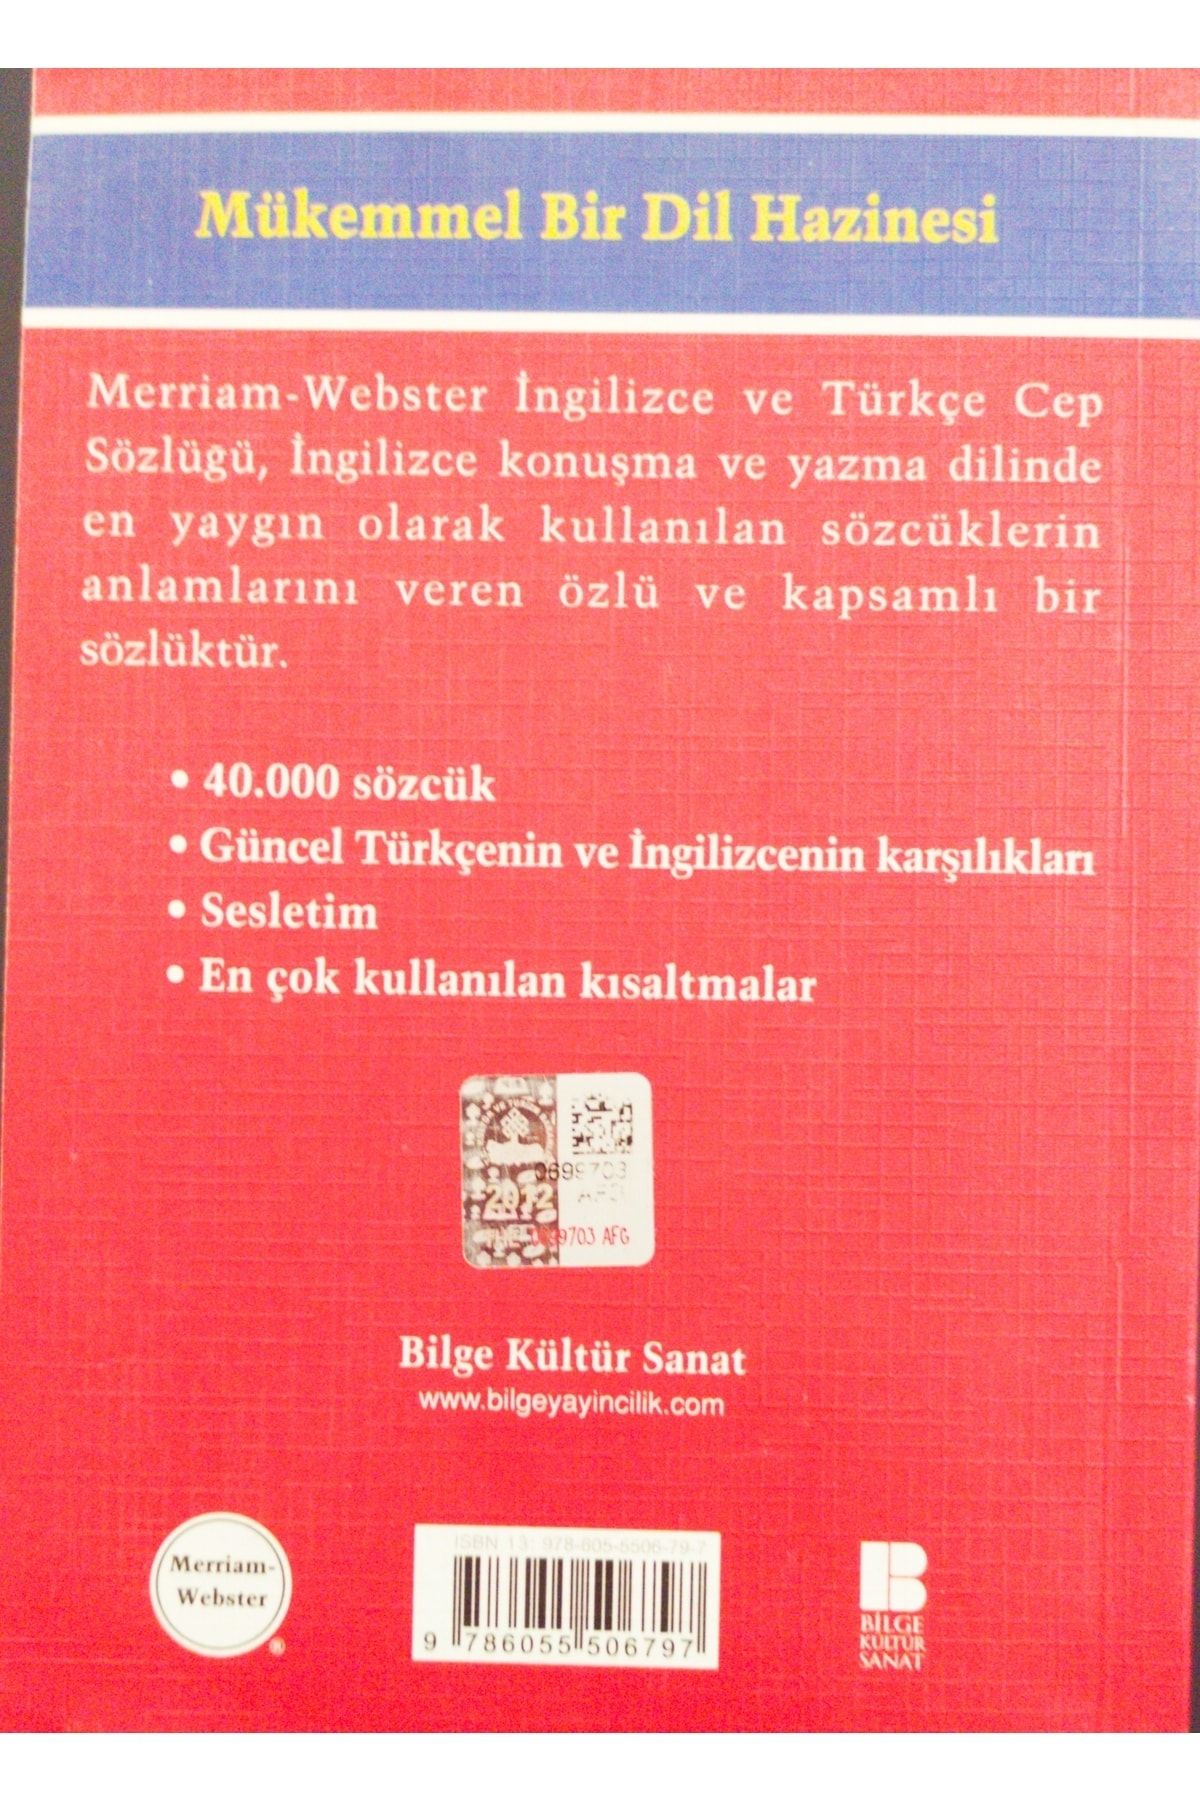 Bilge Kültür Sanat Merrıam Webster's Pocket Dıctıonary Englısh-turkısh Turkısh-englısh